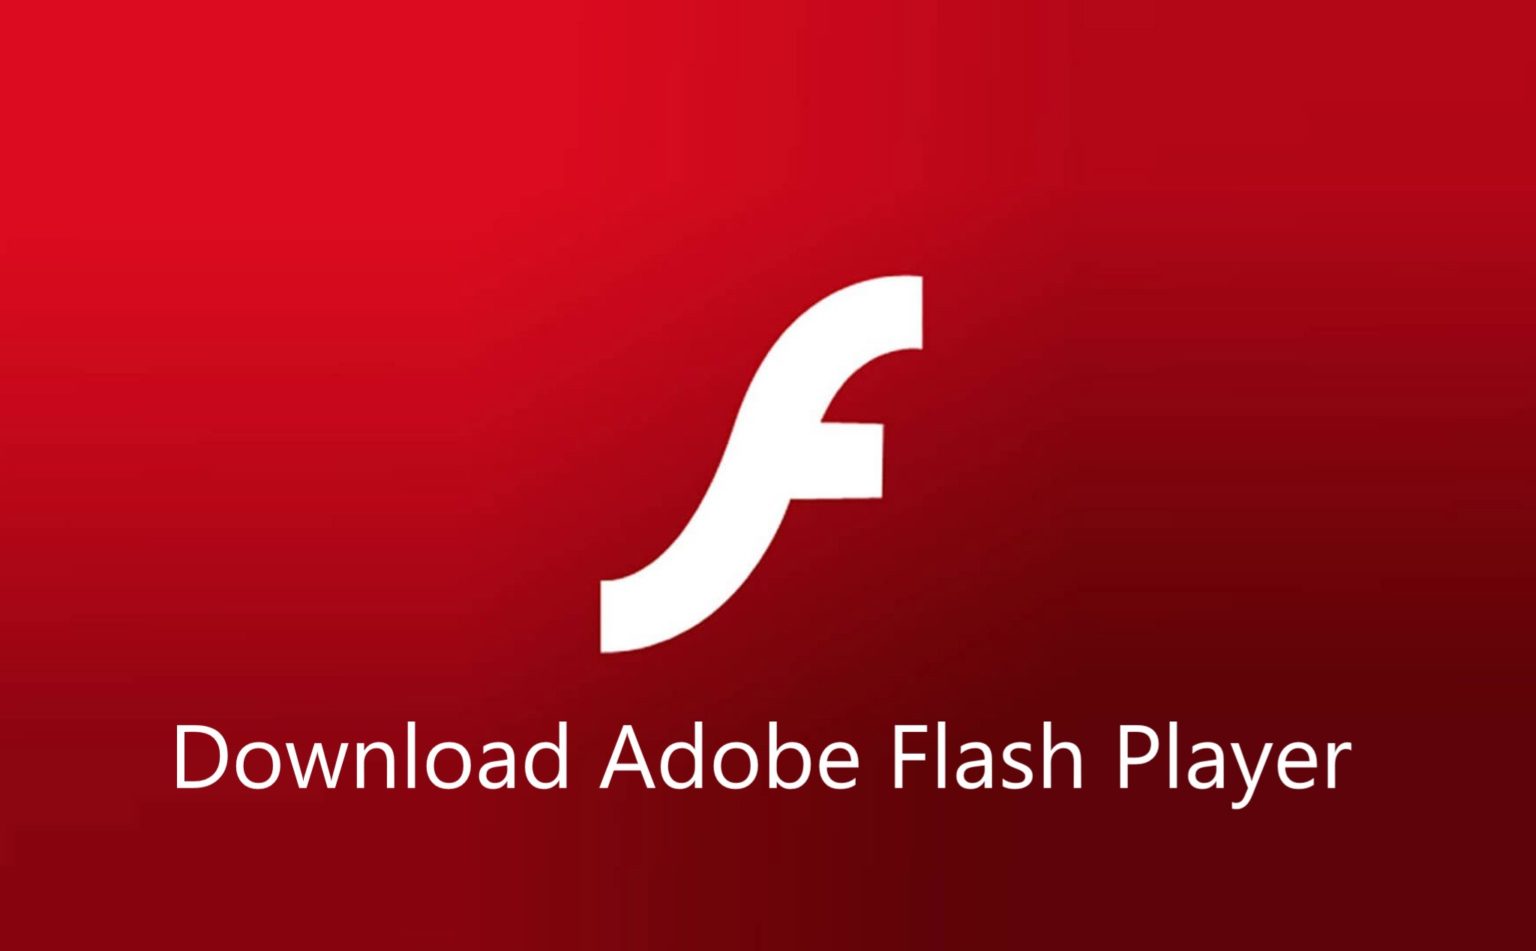 Adobe flash player driver download windows 7 download recycle bin windows 7